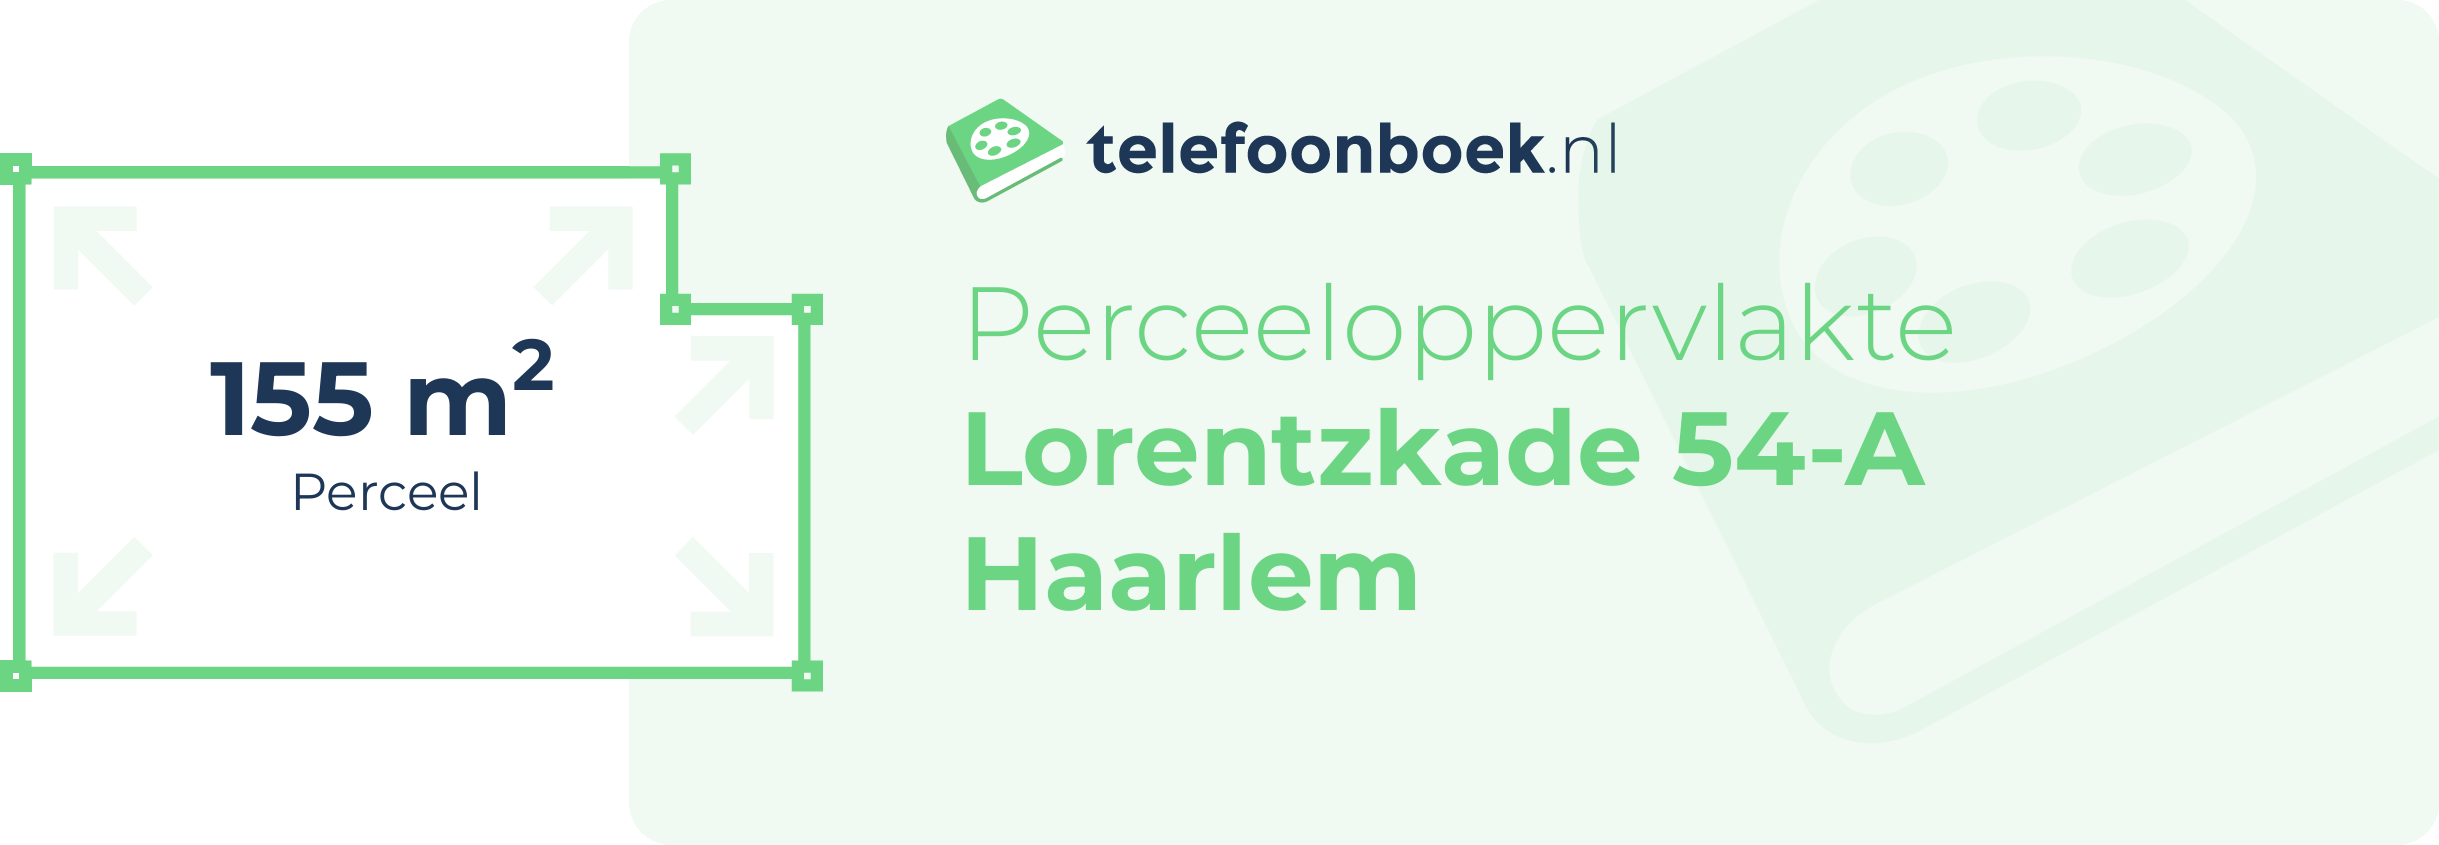 Perceeloppervlakte Lorentzkade 54-A Haarlem